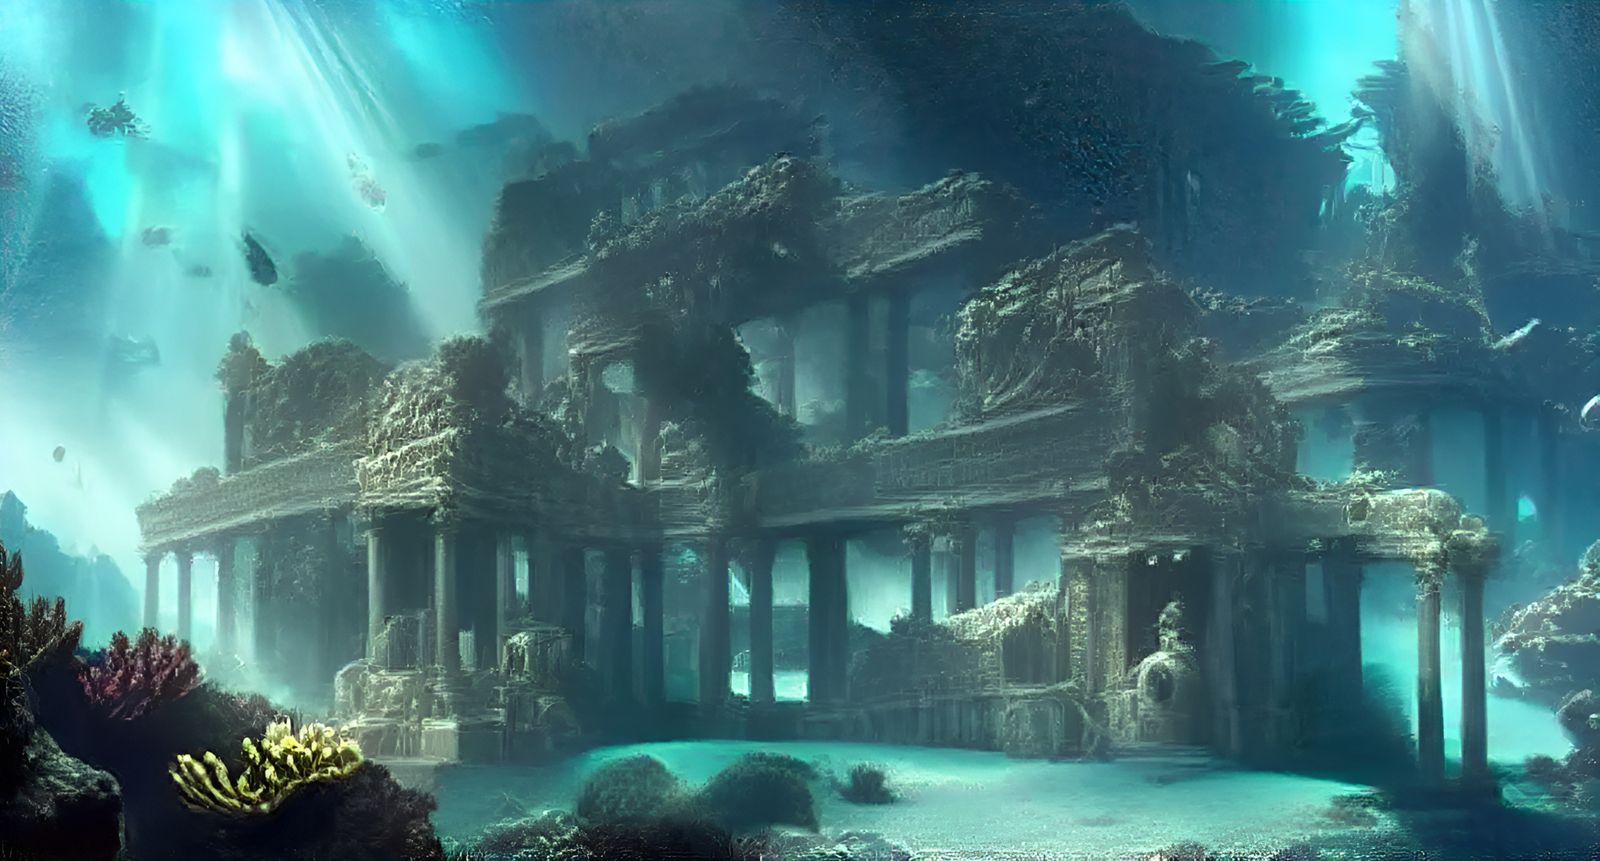 Atlantis Discovered